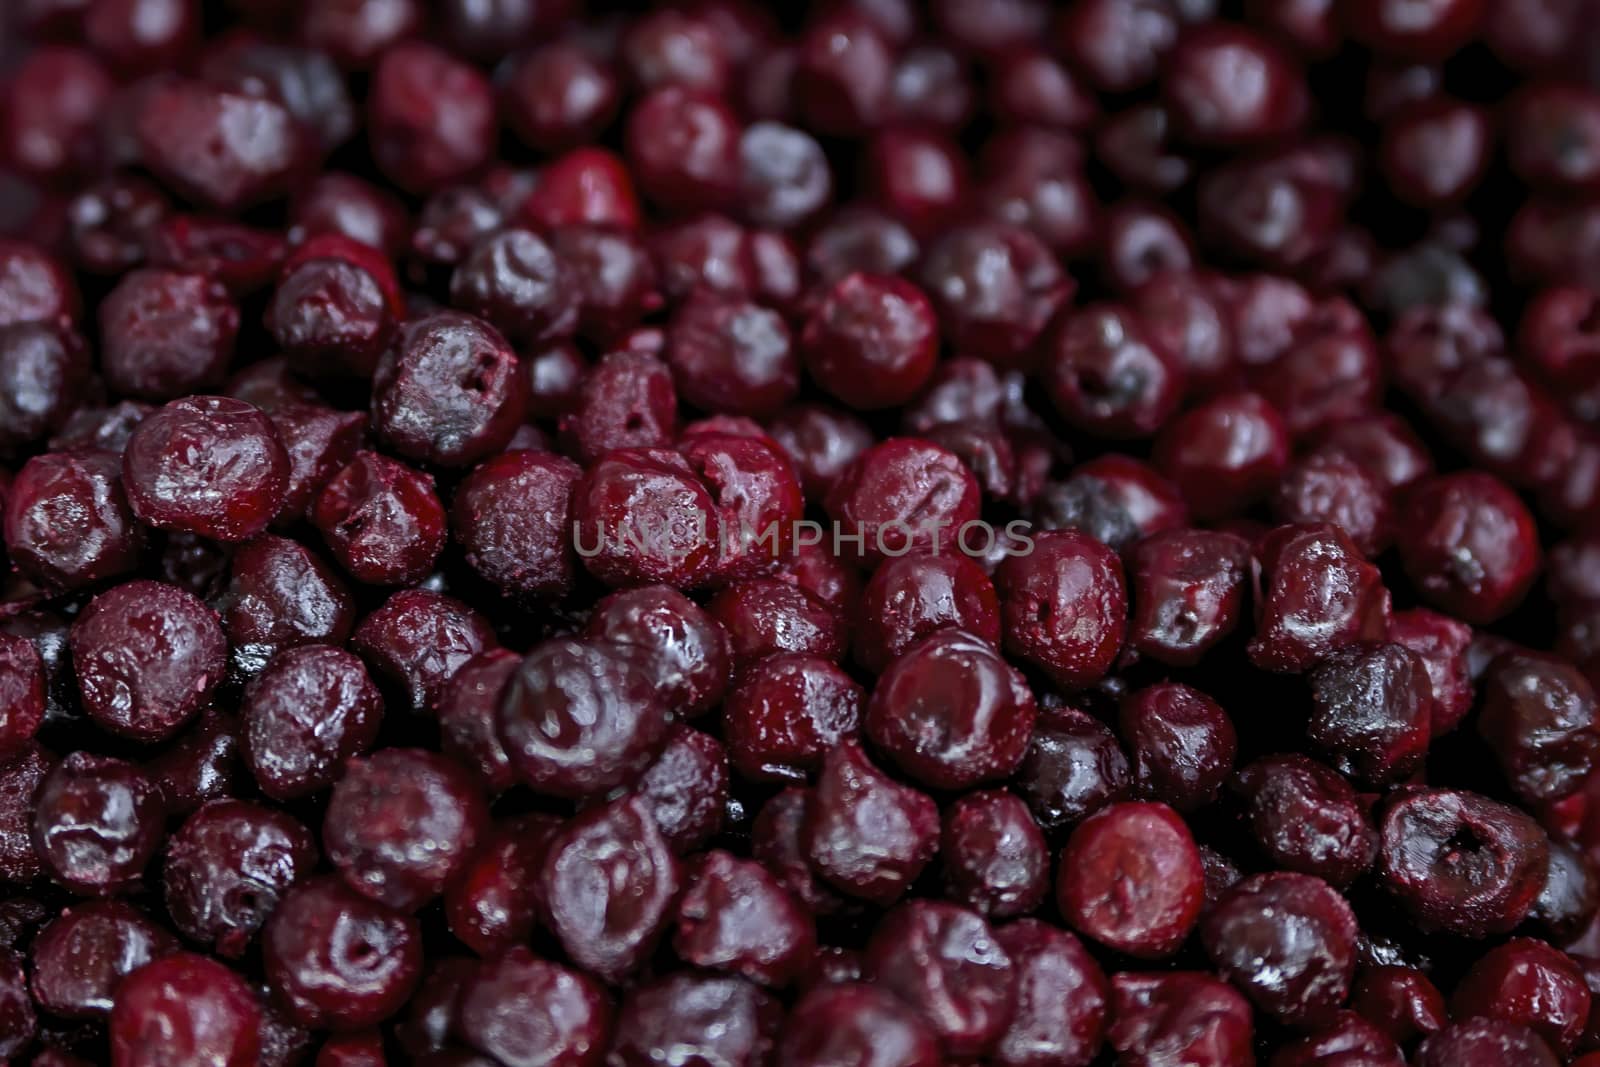 Frozen berries in grocery store shot close-up, blurred background. Dark red cherries